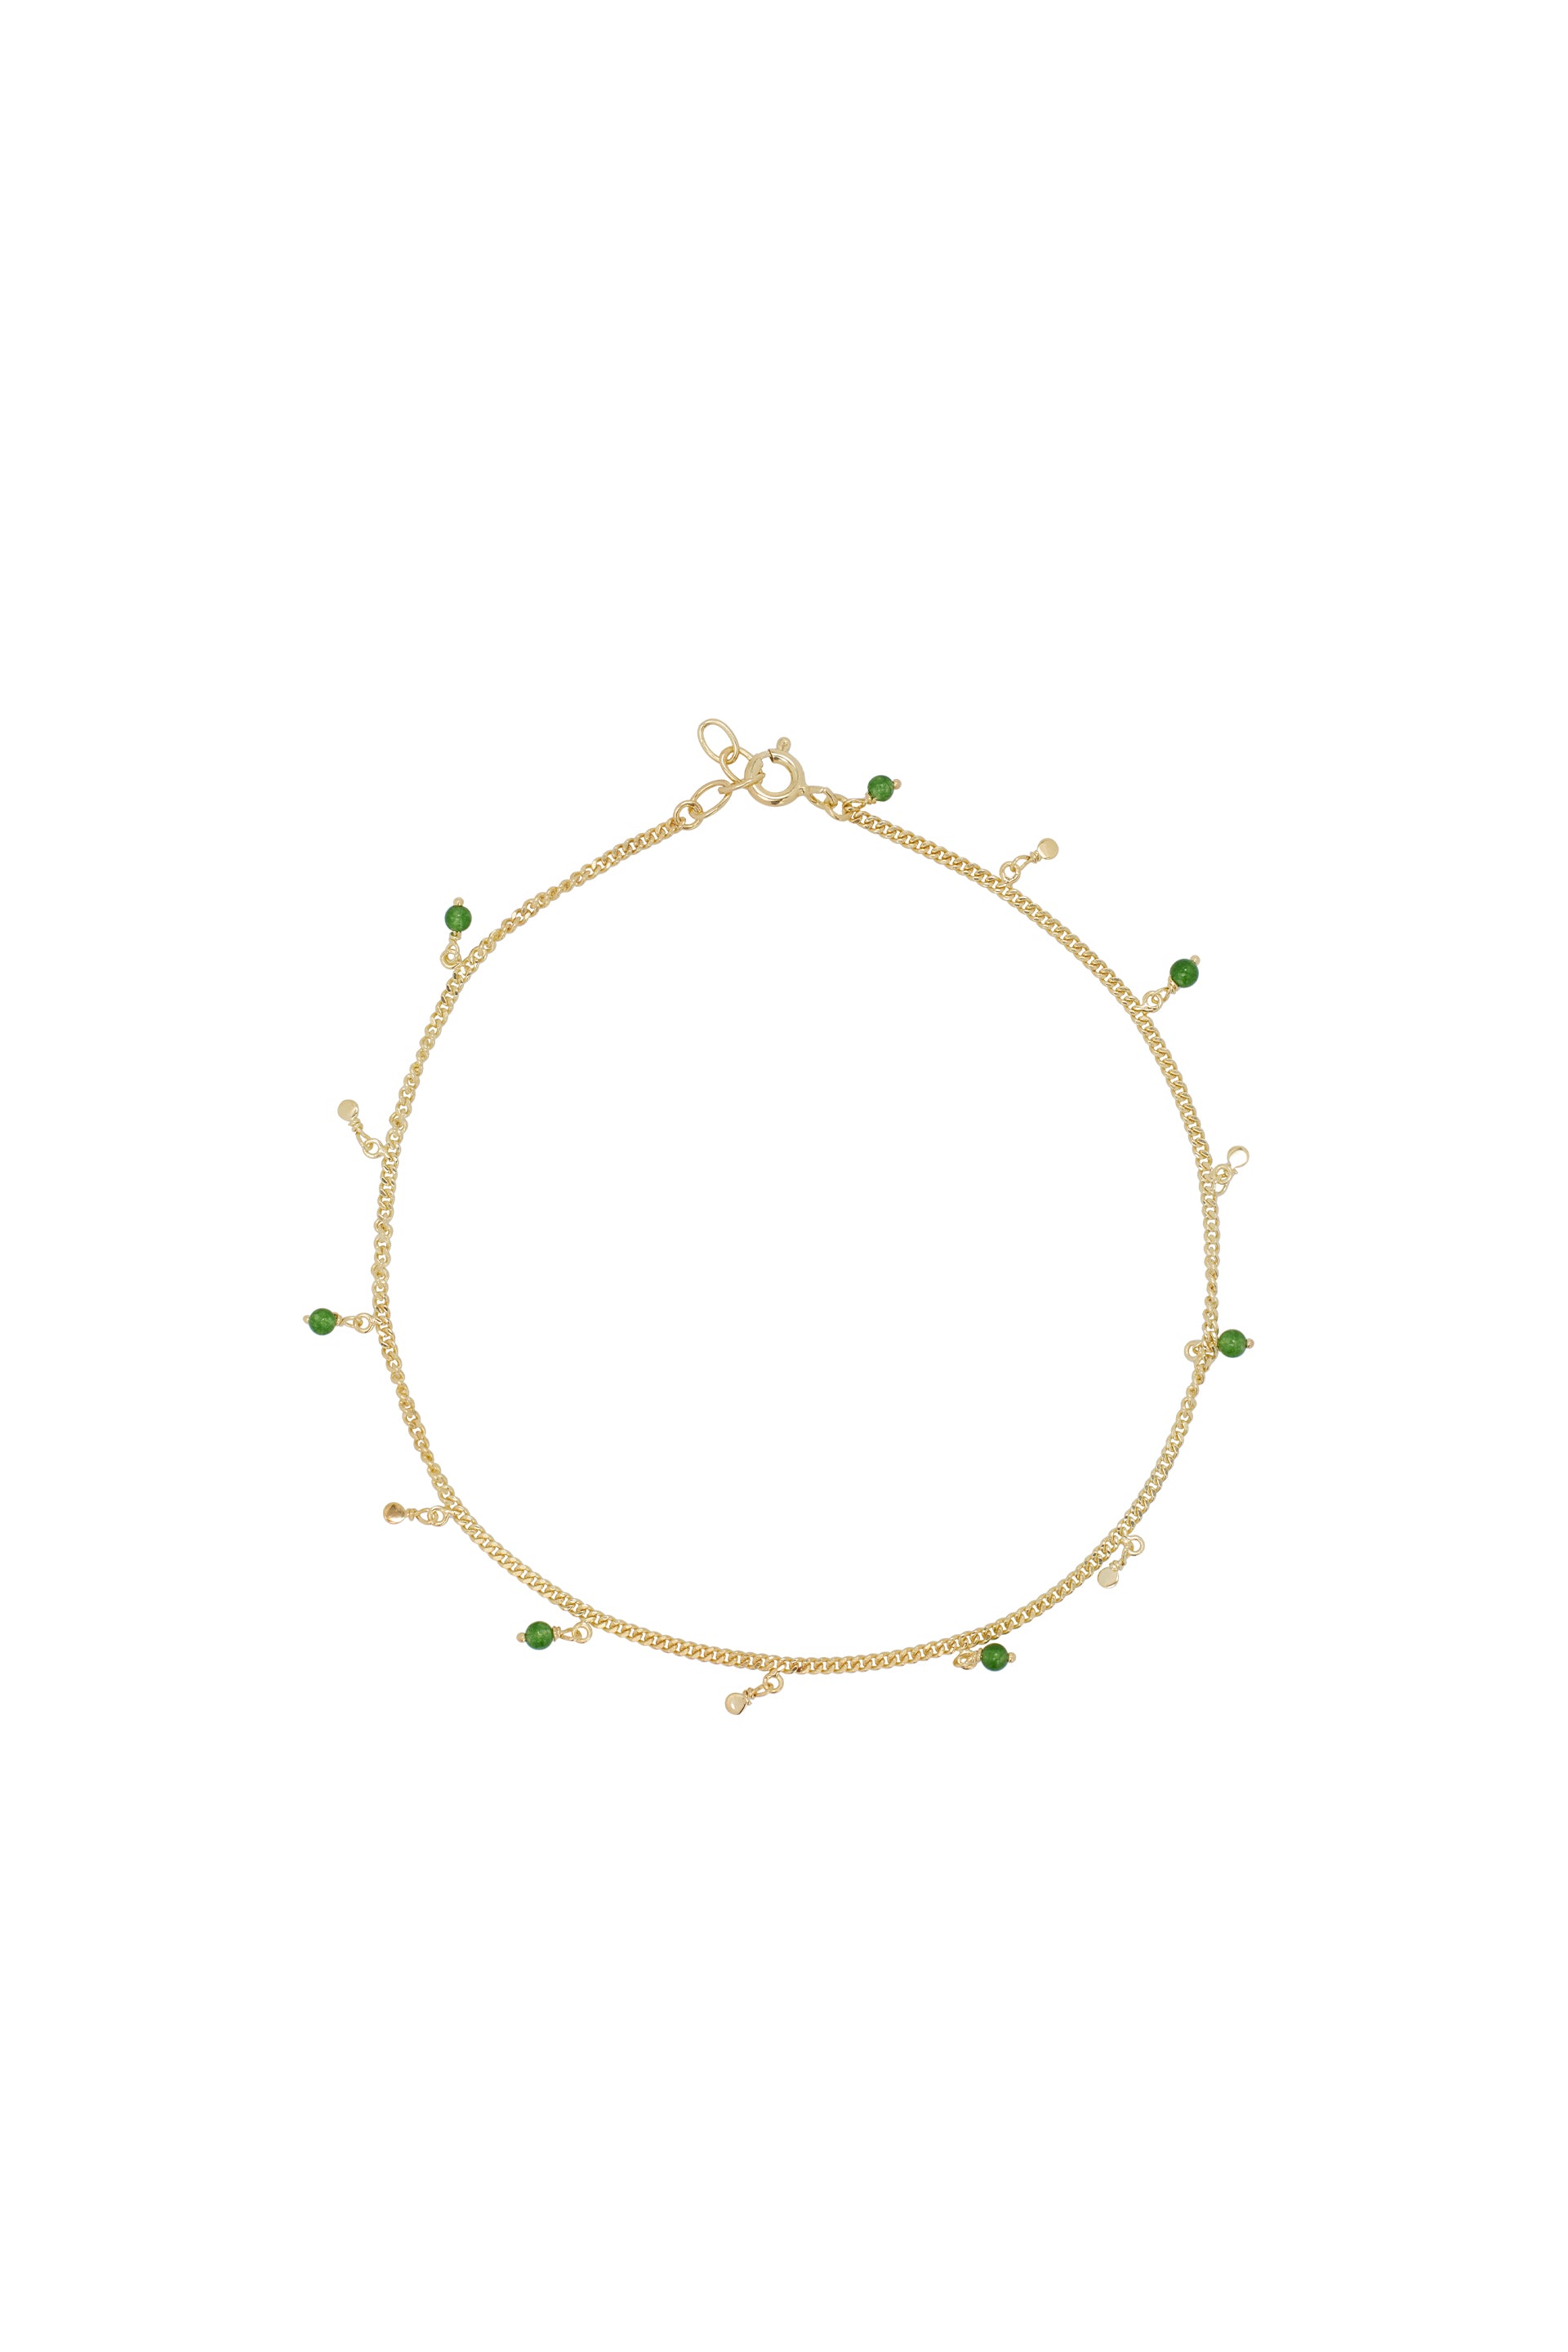 Xzota/ Armbanden - Multi round charm - Gold plated